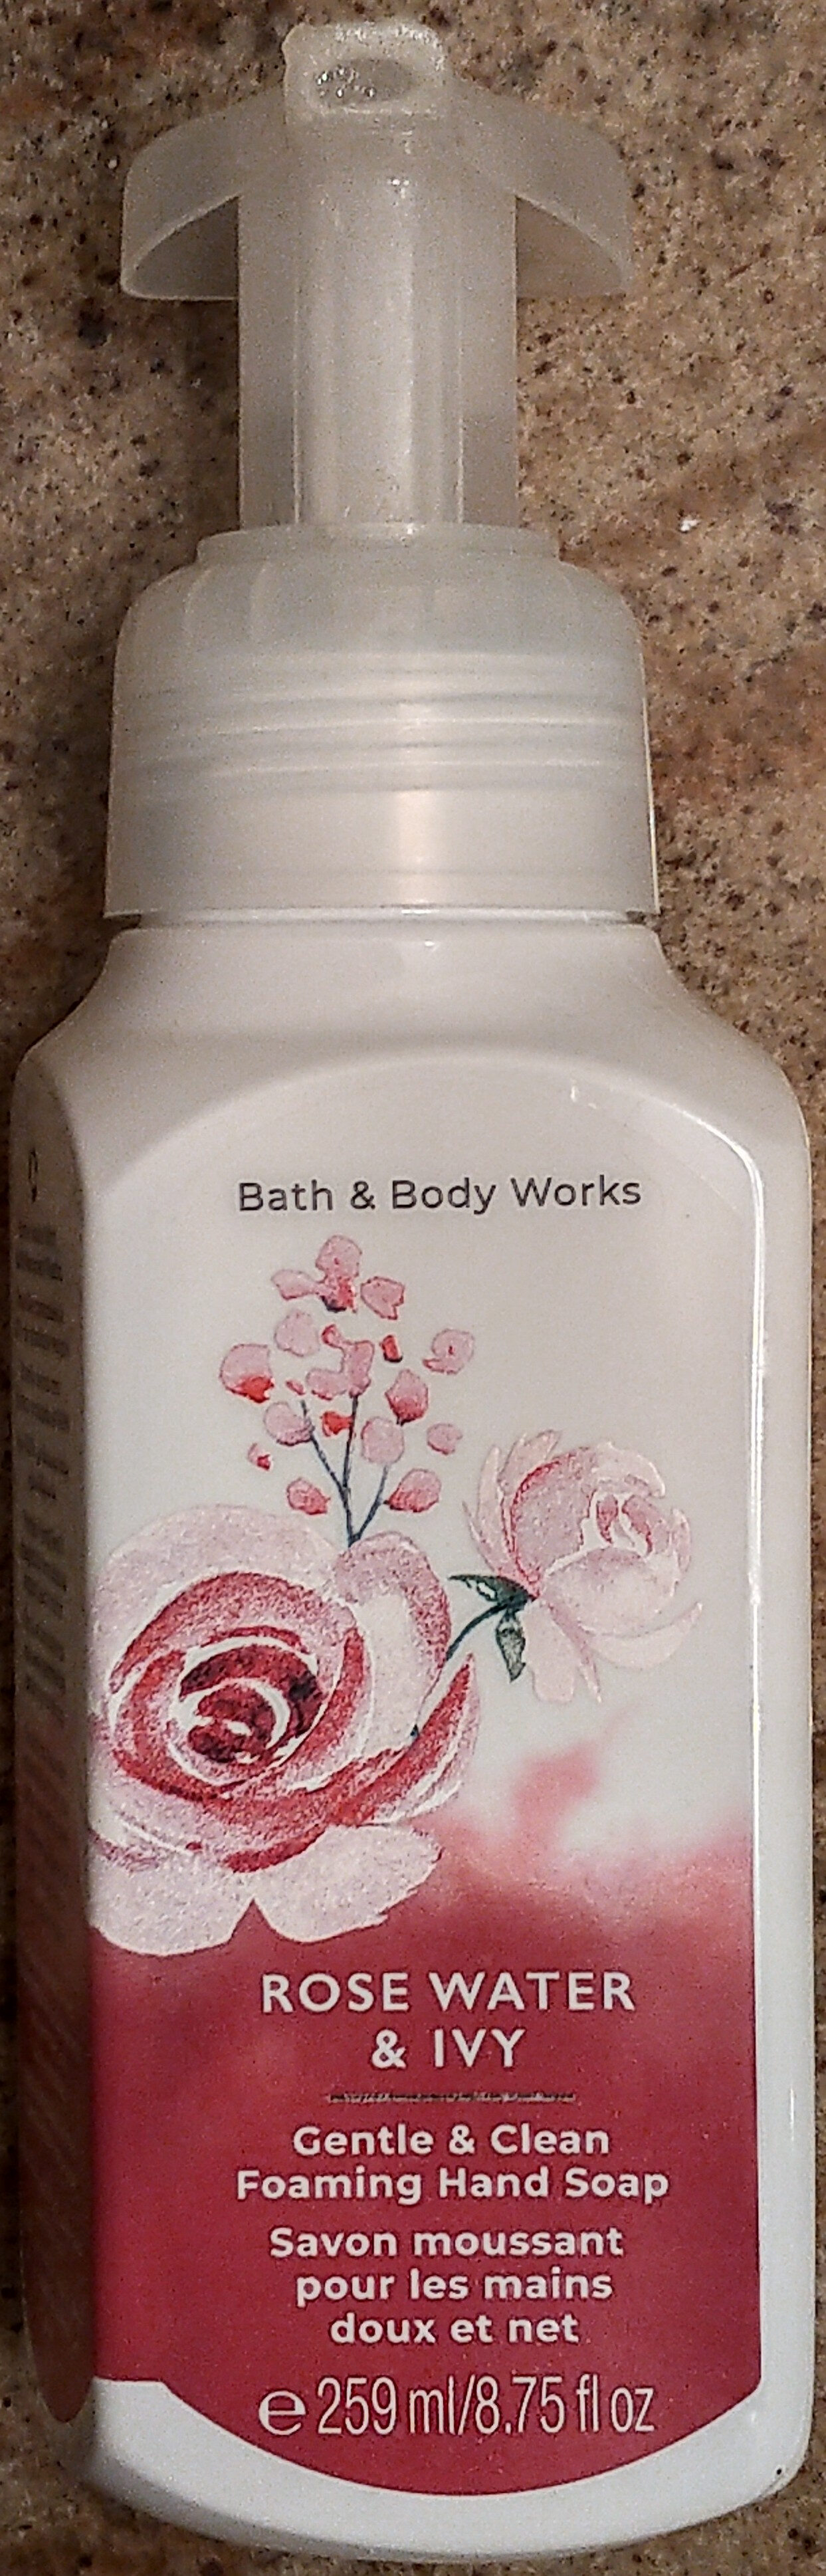 Rose Water & Ivy Gentle & Clean Foaming Hand Soap - Продукт - en